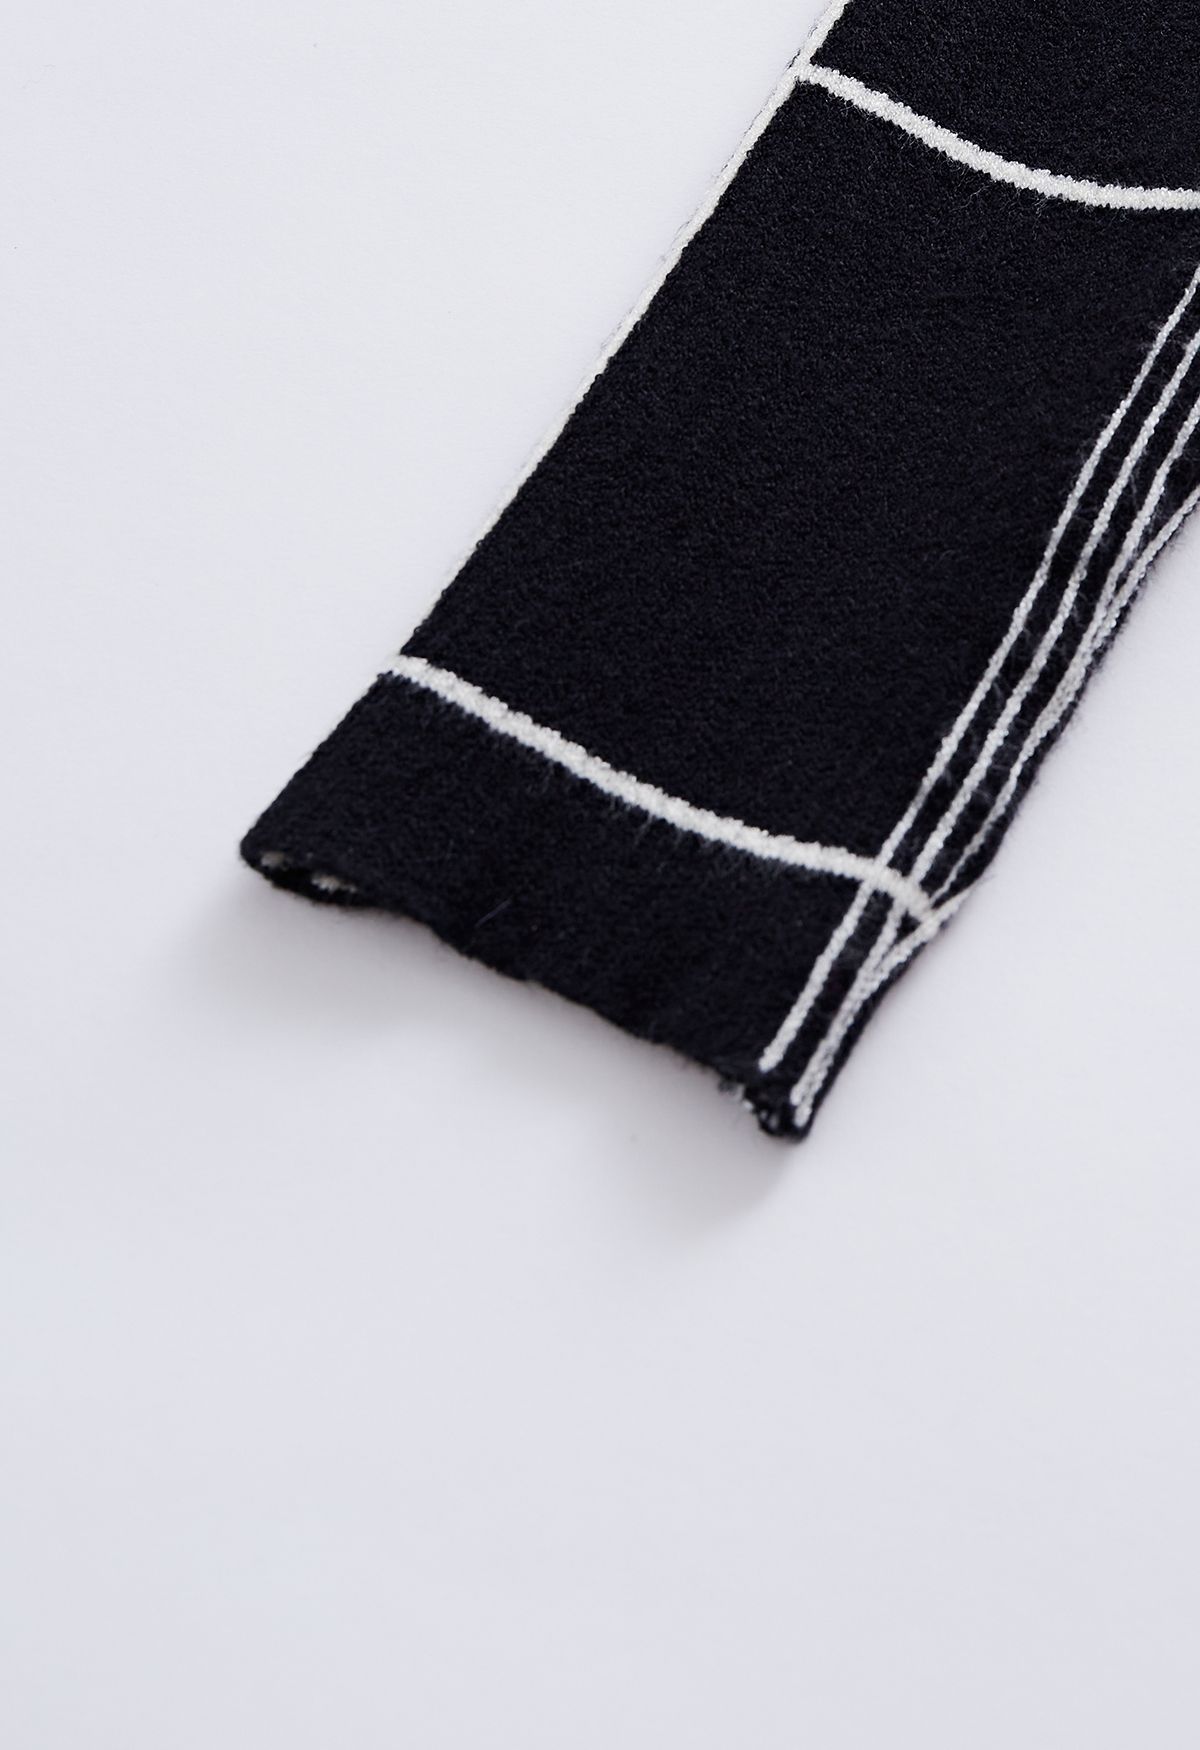 Grid Mock Neck Knit Top in Black